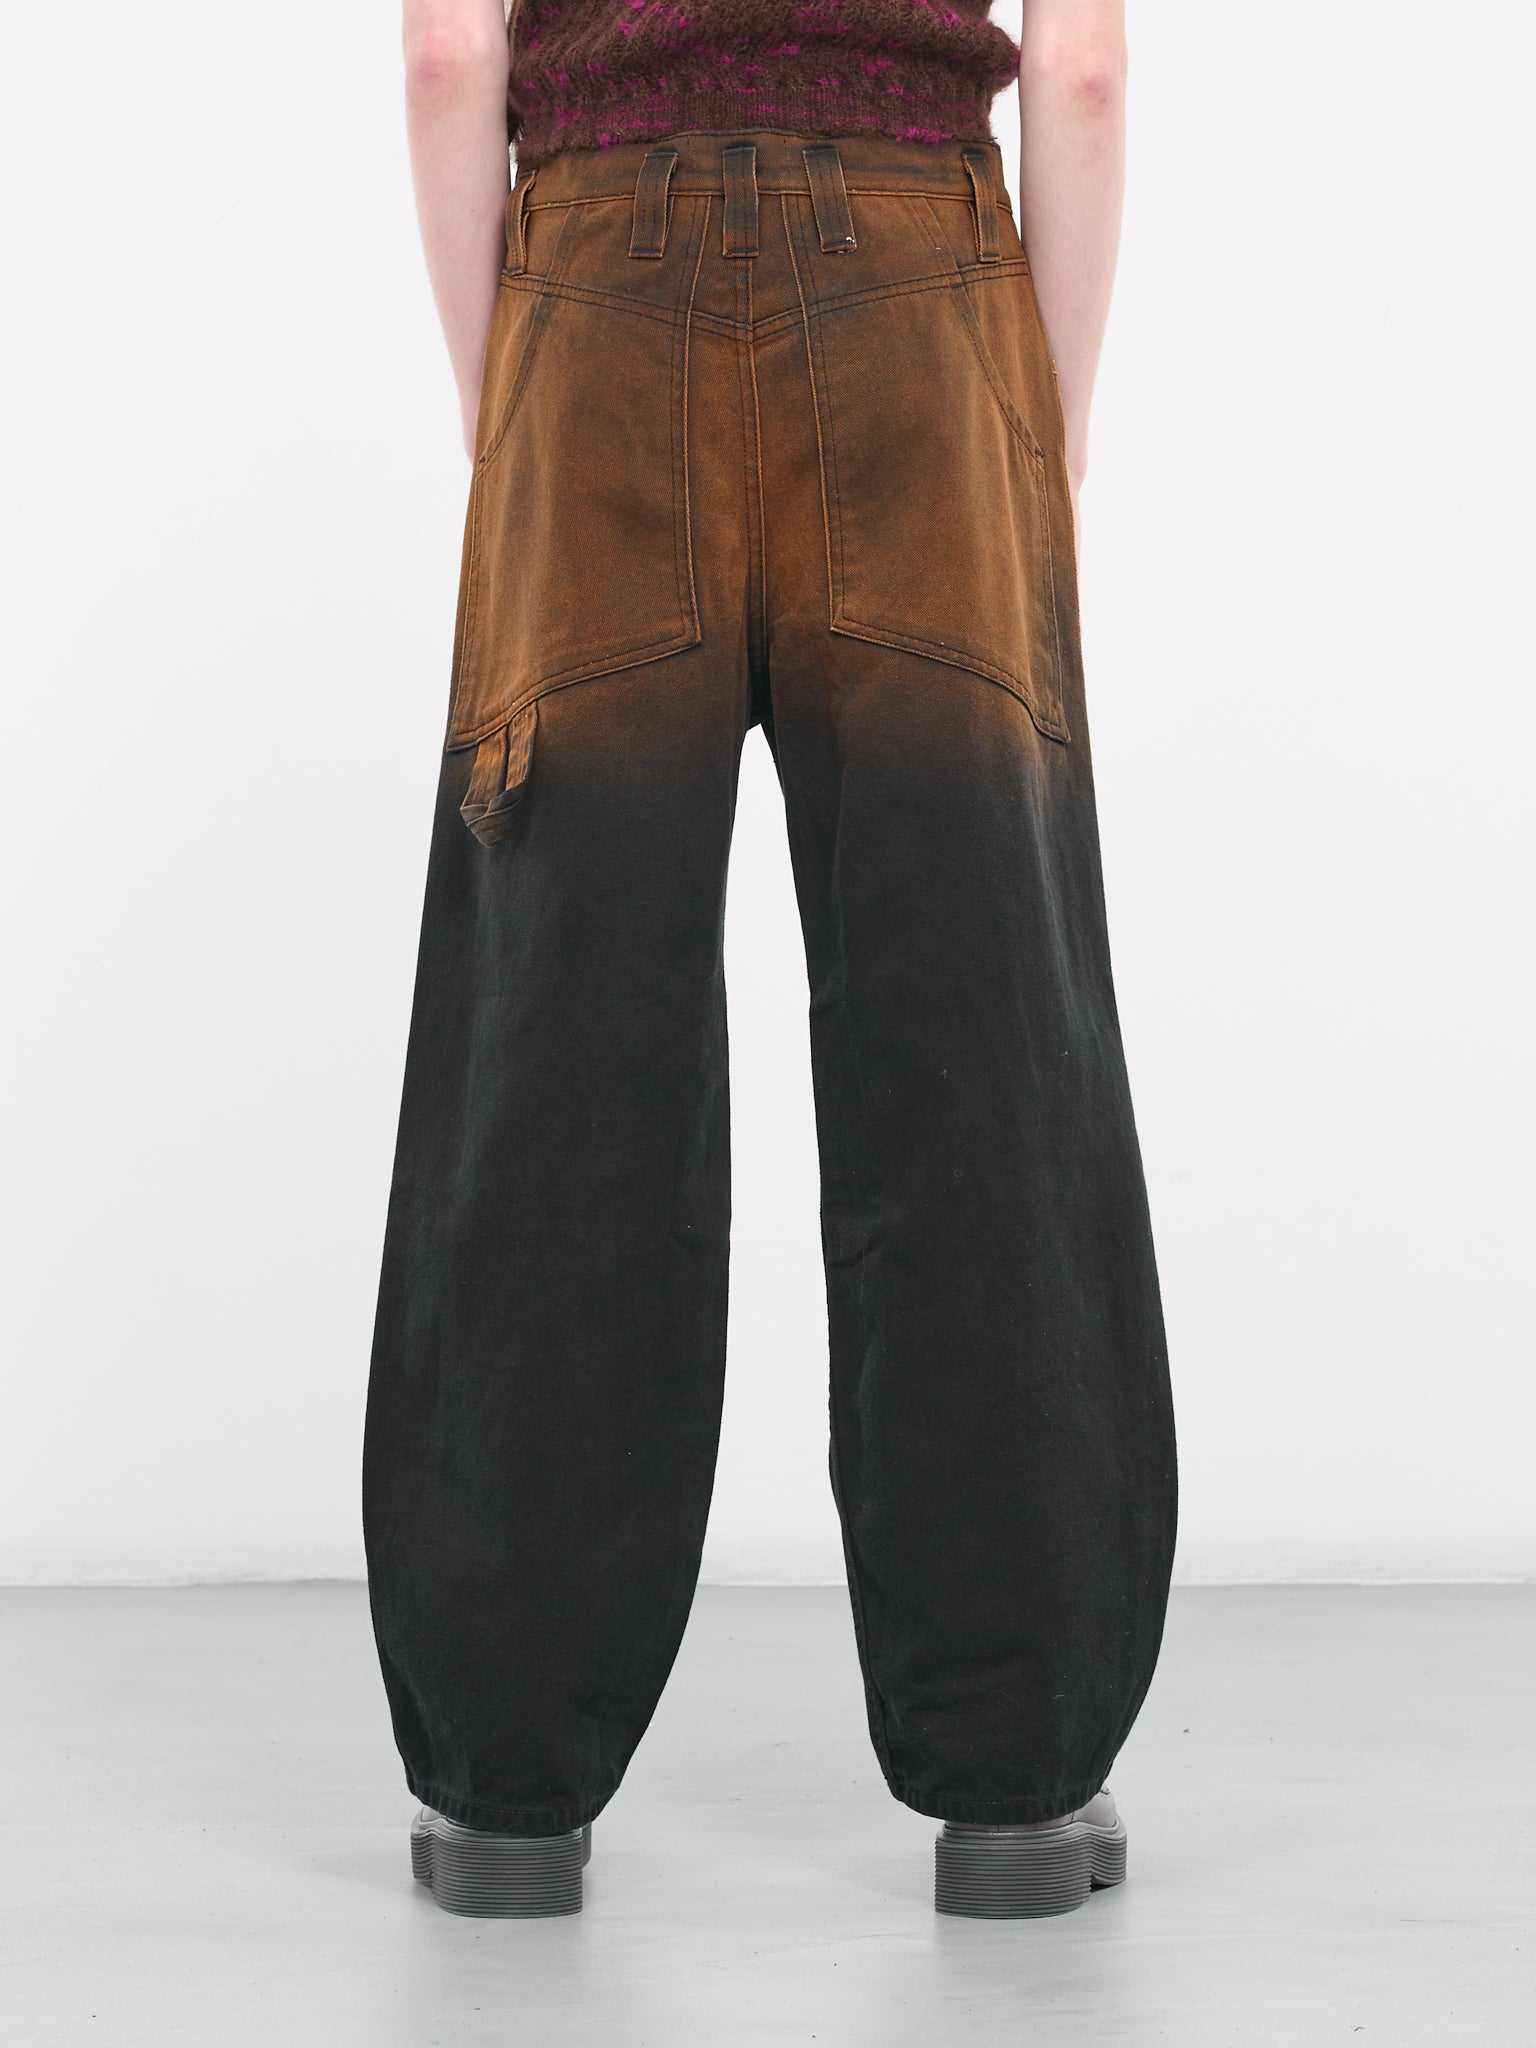 Rust Jeans (555-EL-R-RUST)